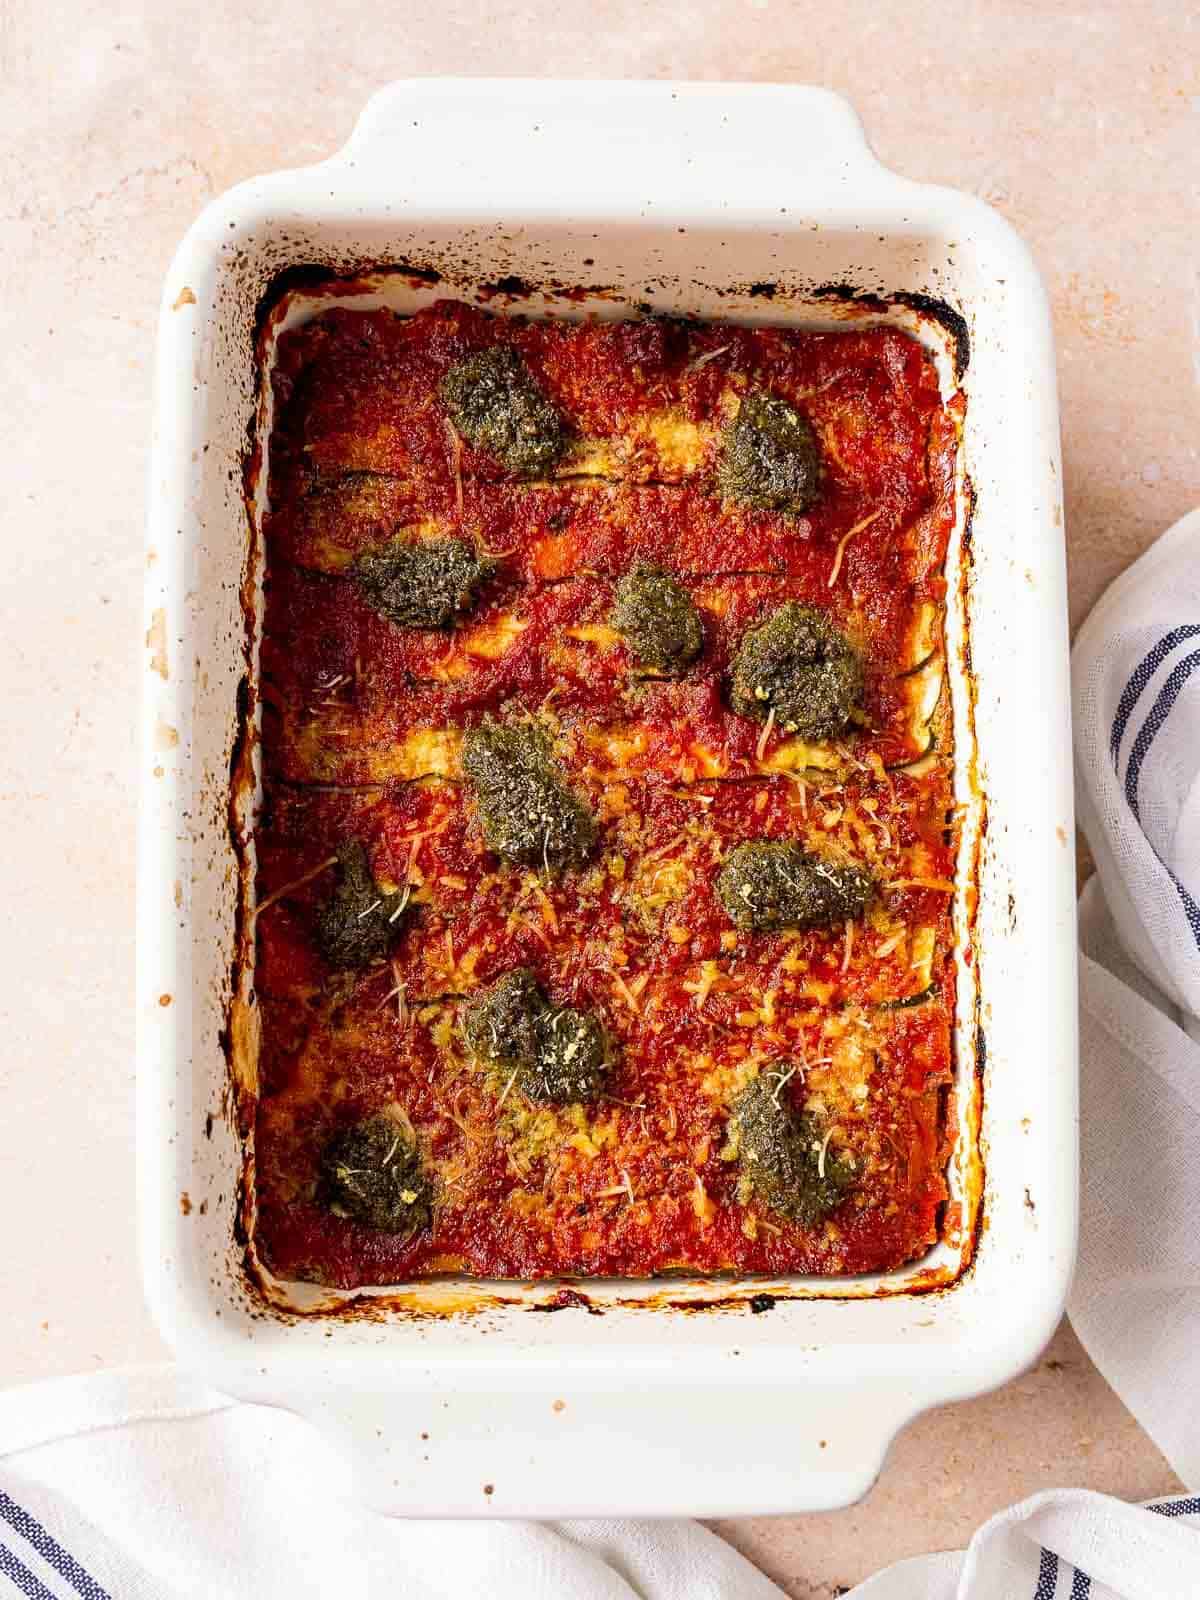 cooked vegetarian zucchini lasagna casserole dish with vegan gluten-free lasagna.